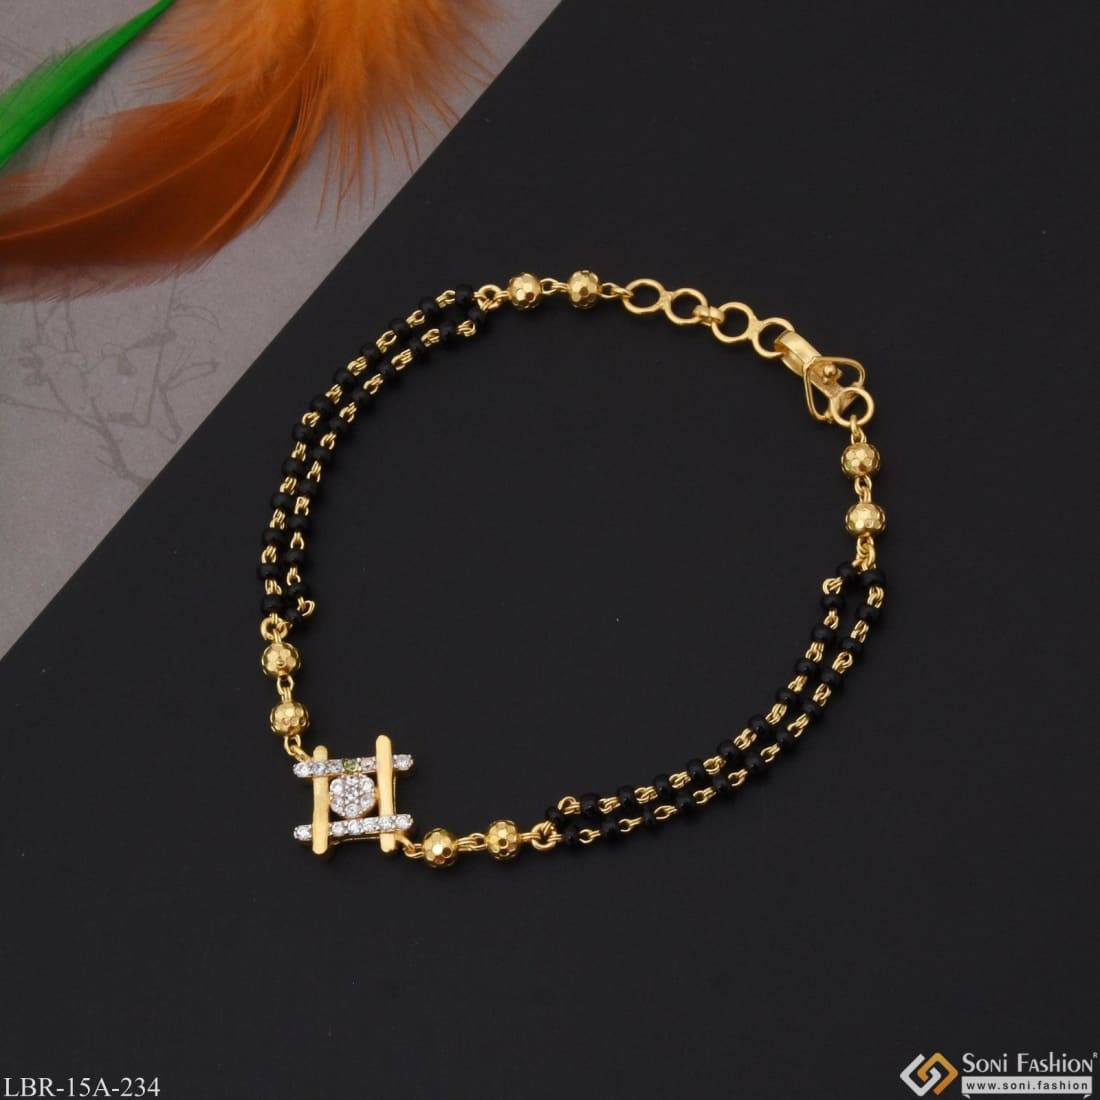 Mahi Dual Chain Heart Charm Mangalsutra Bracelet with Beads and Crysta